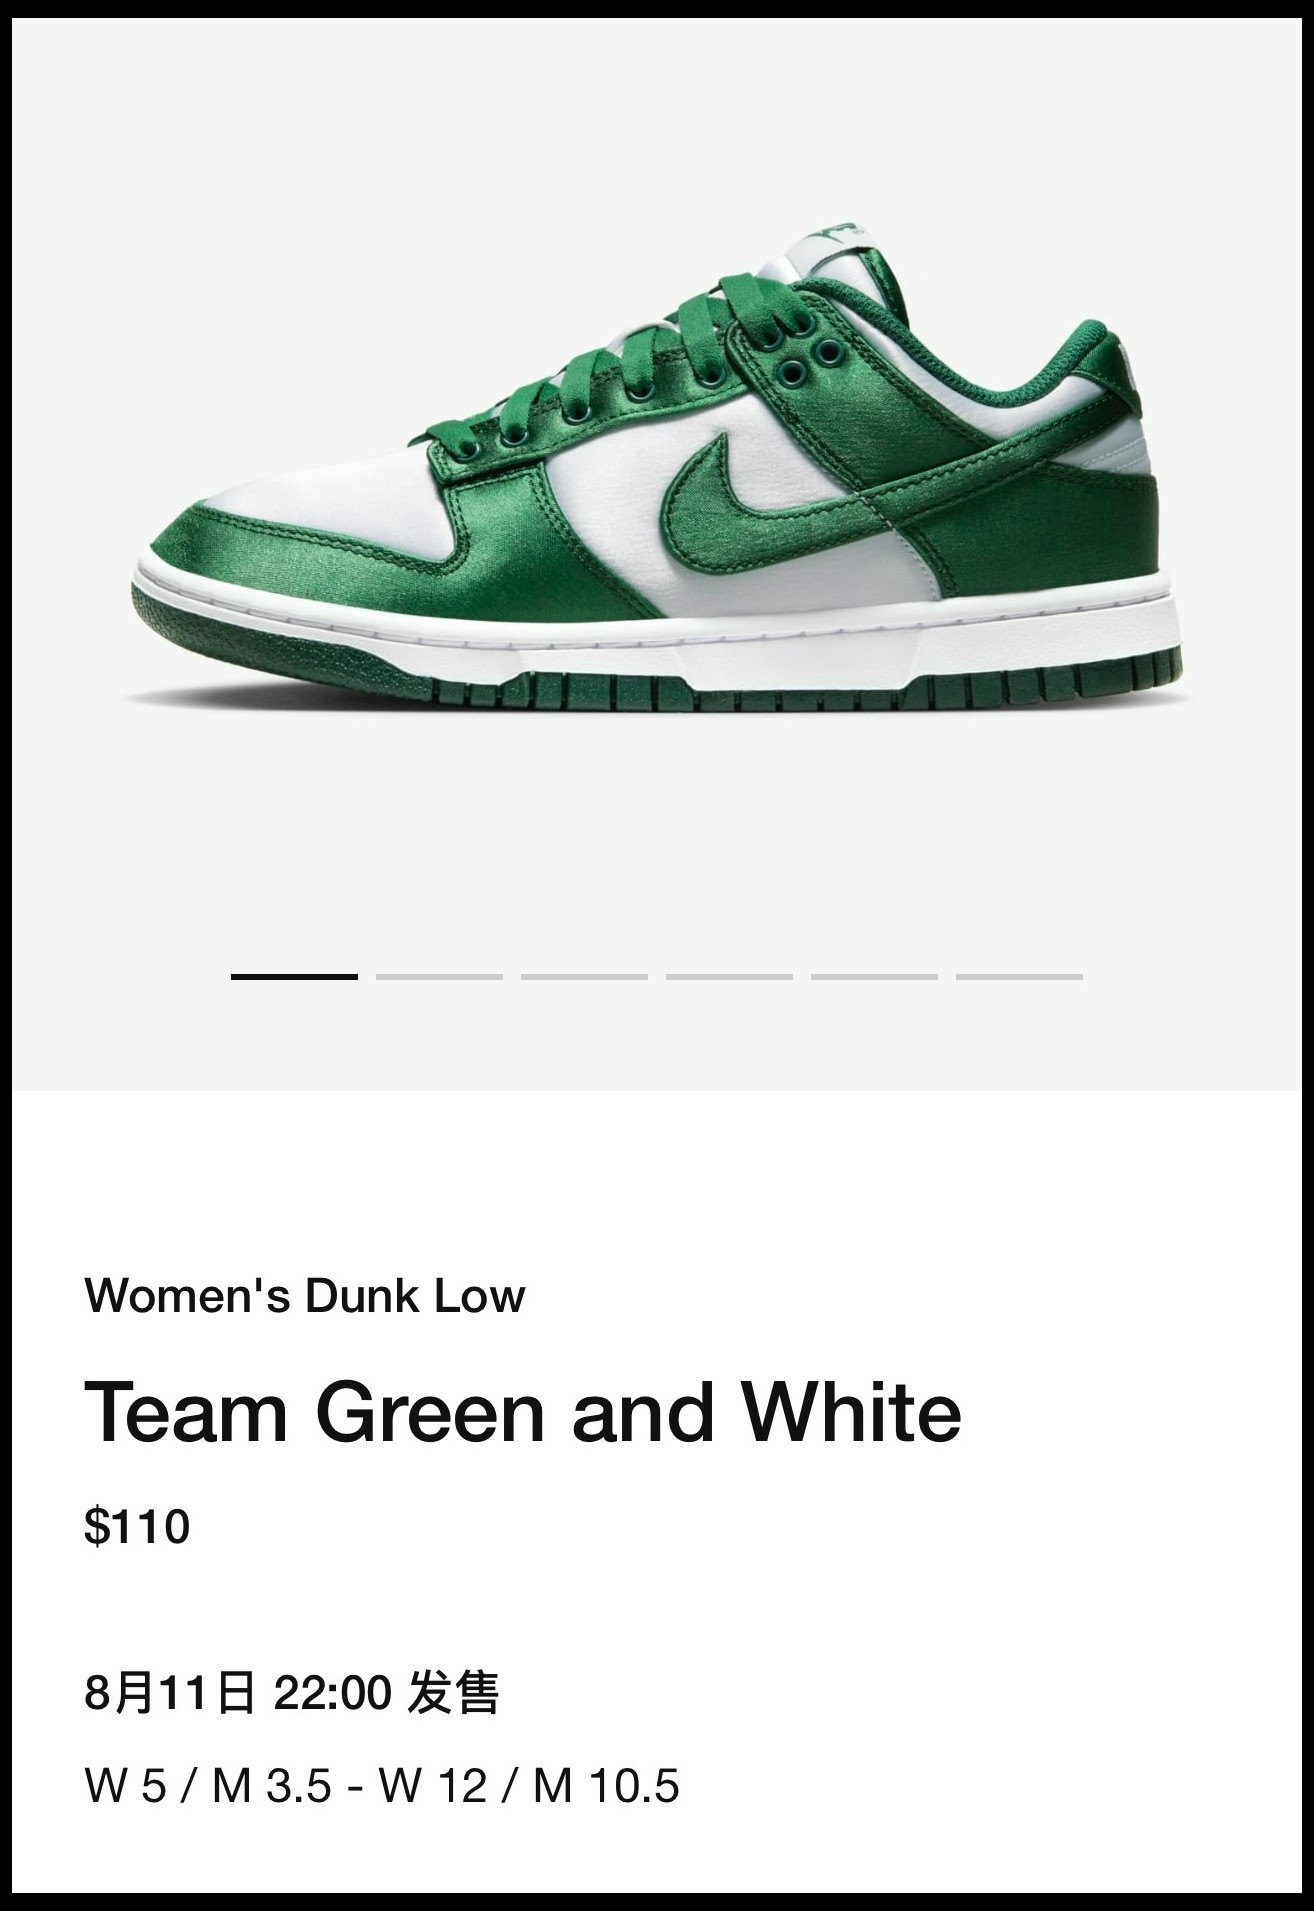 DX5931-100,Satin Green,Dunk Lo  SNKRS 上架！Nike「丝绸新鞋」颜值你打几分？